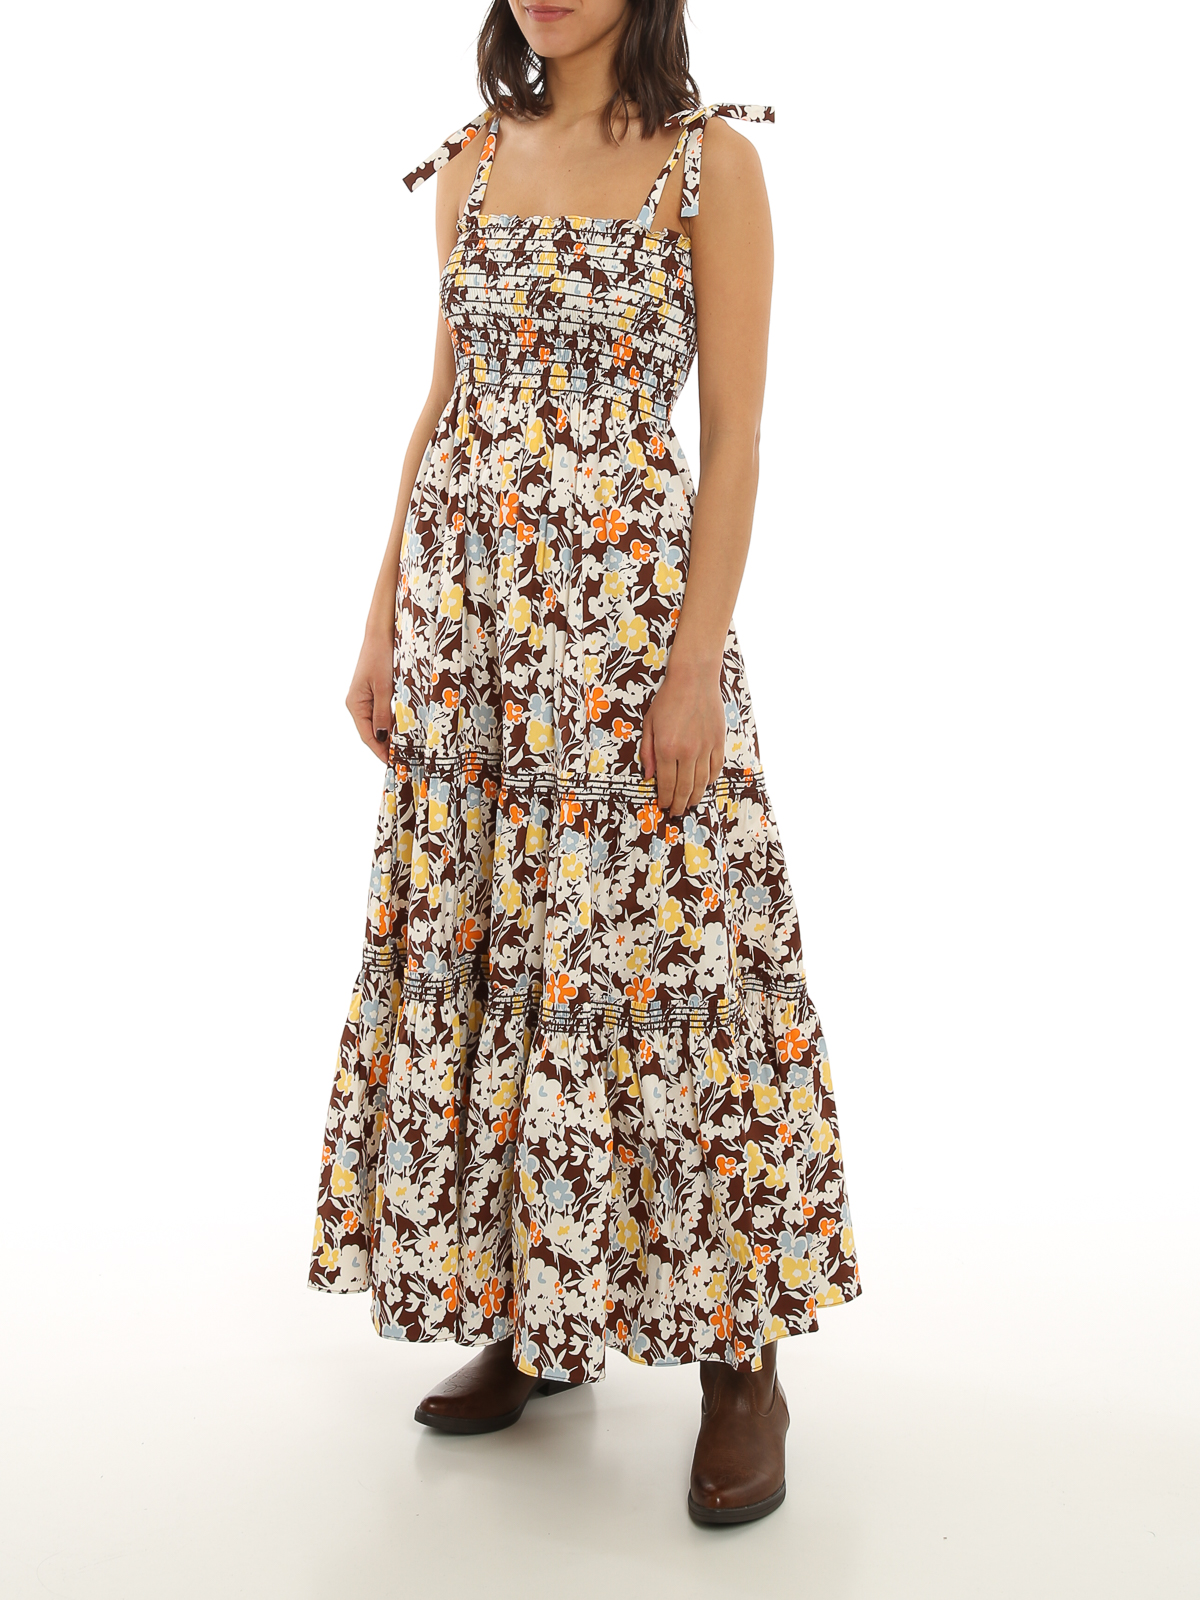 Maxi dresses Tory Burch - Cotton blend floral dress - 76885220 